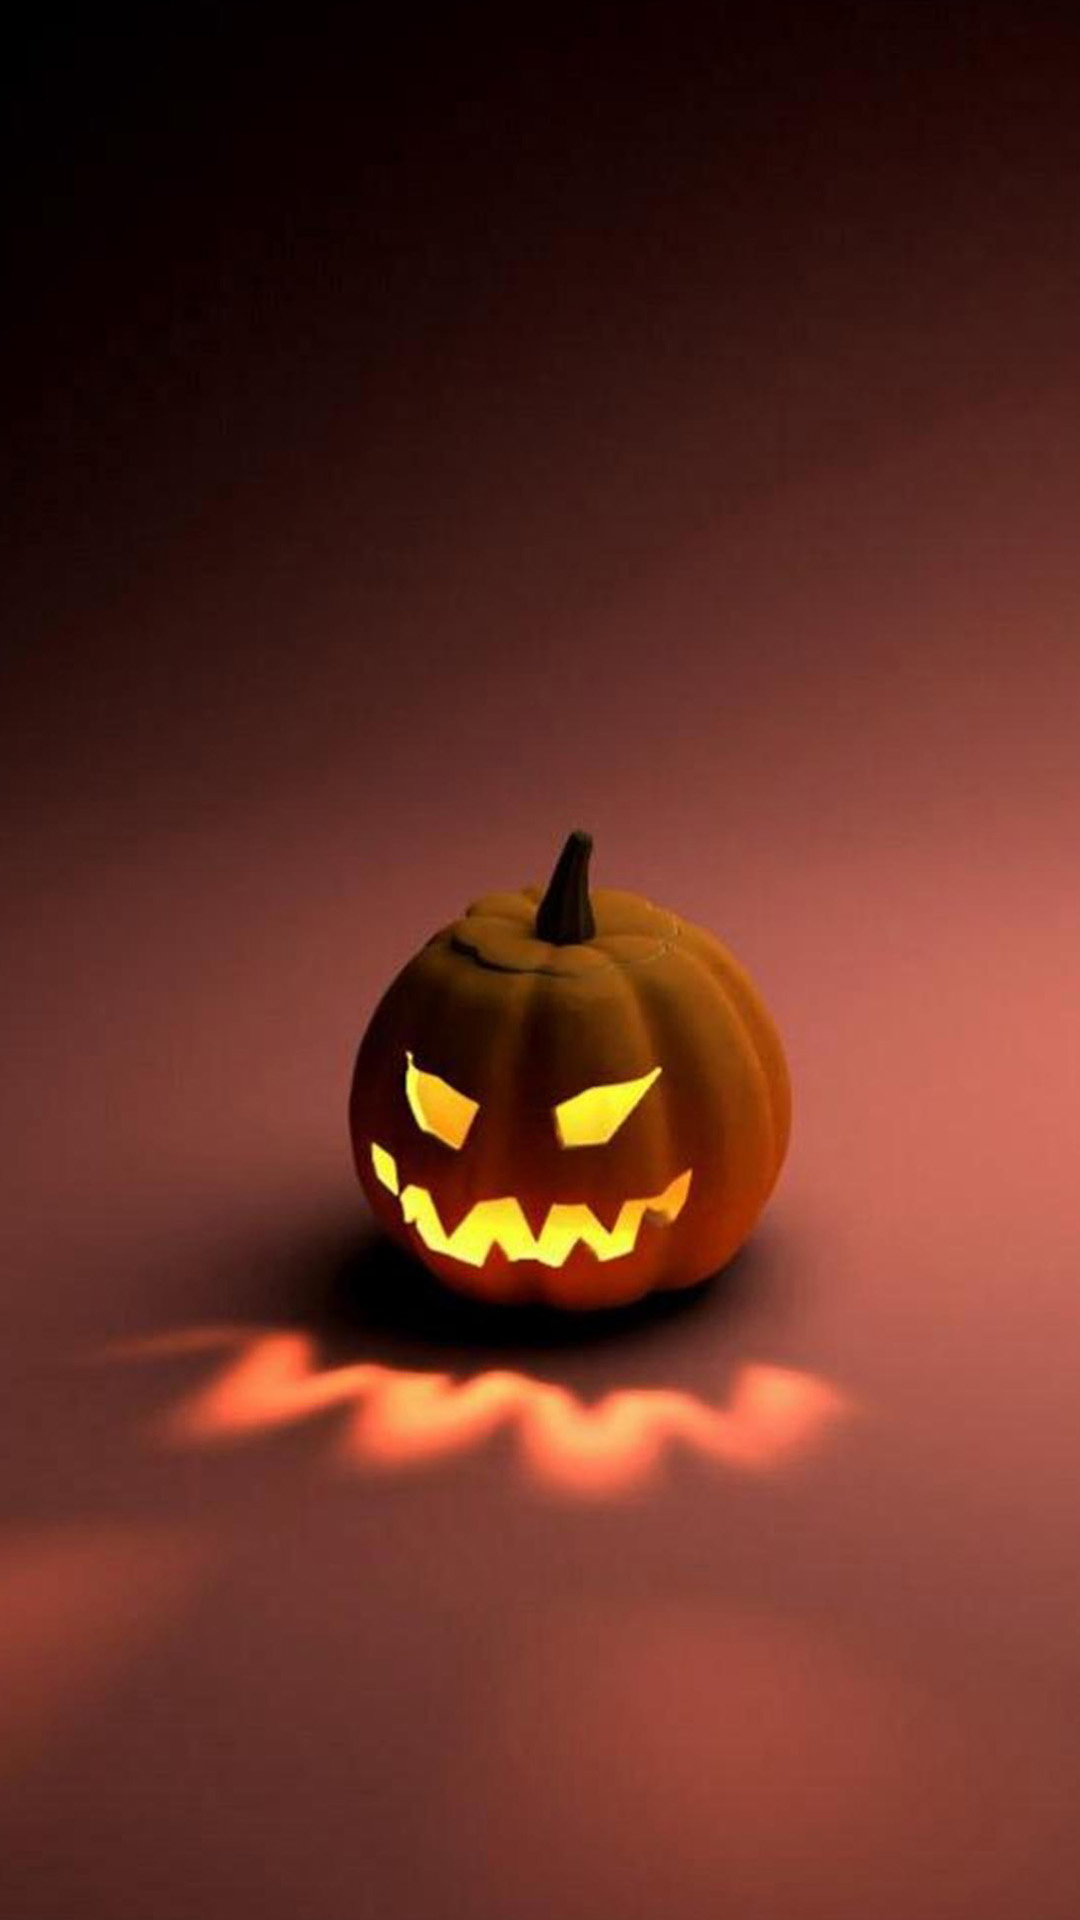 halloween iphone wallpaper,calabaza,jack o' lantern,trick or treat,orange,pumpkin